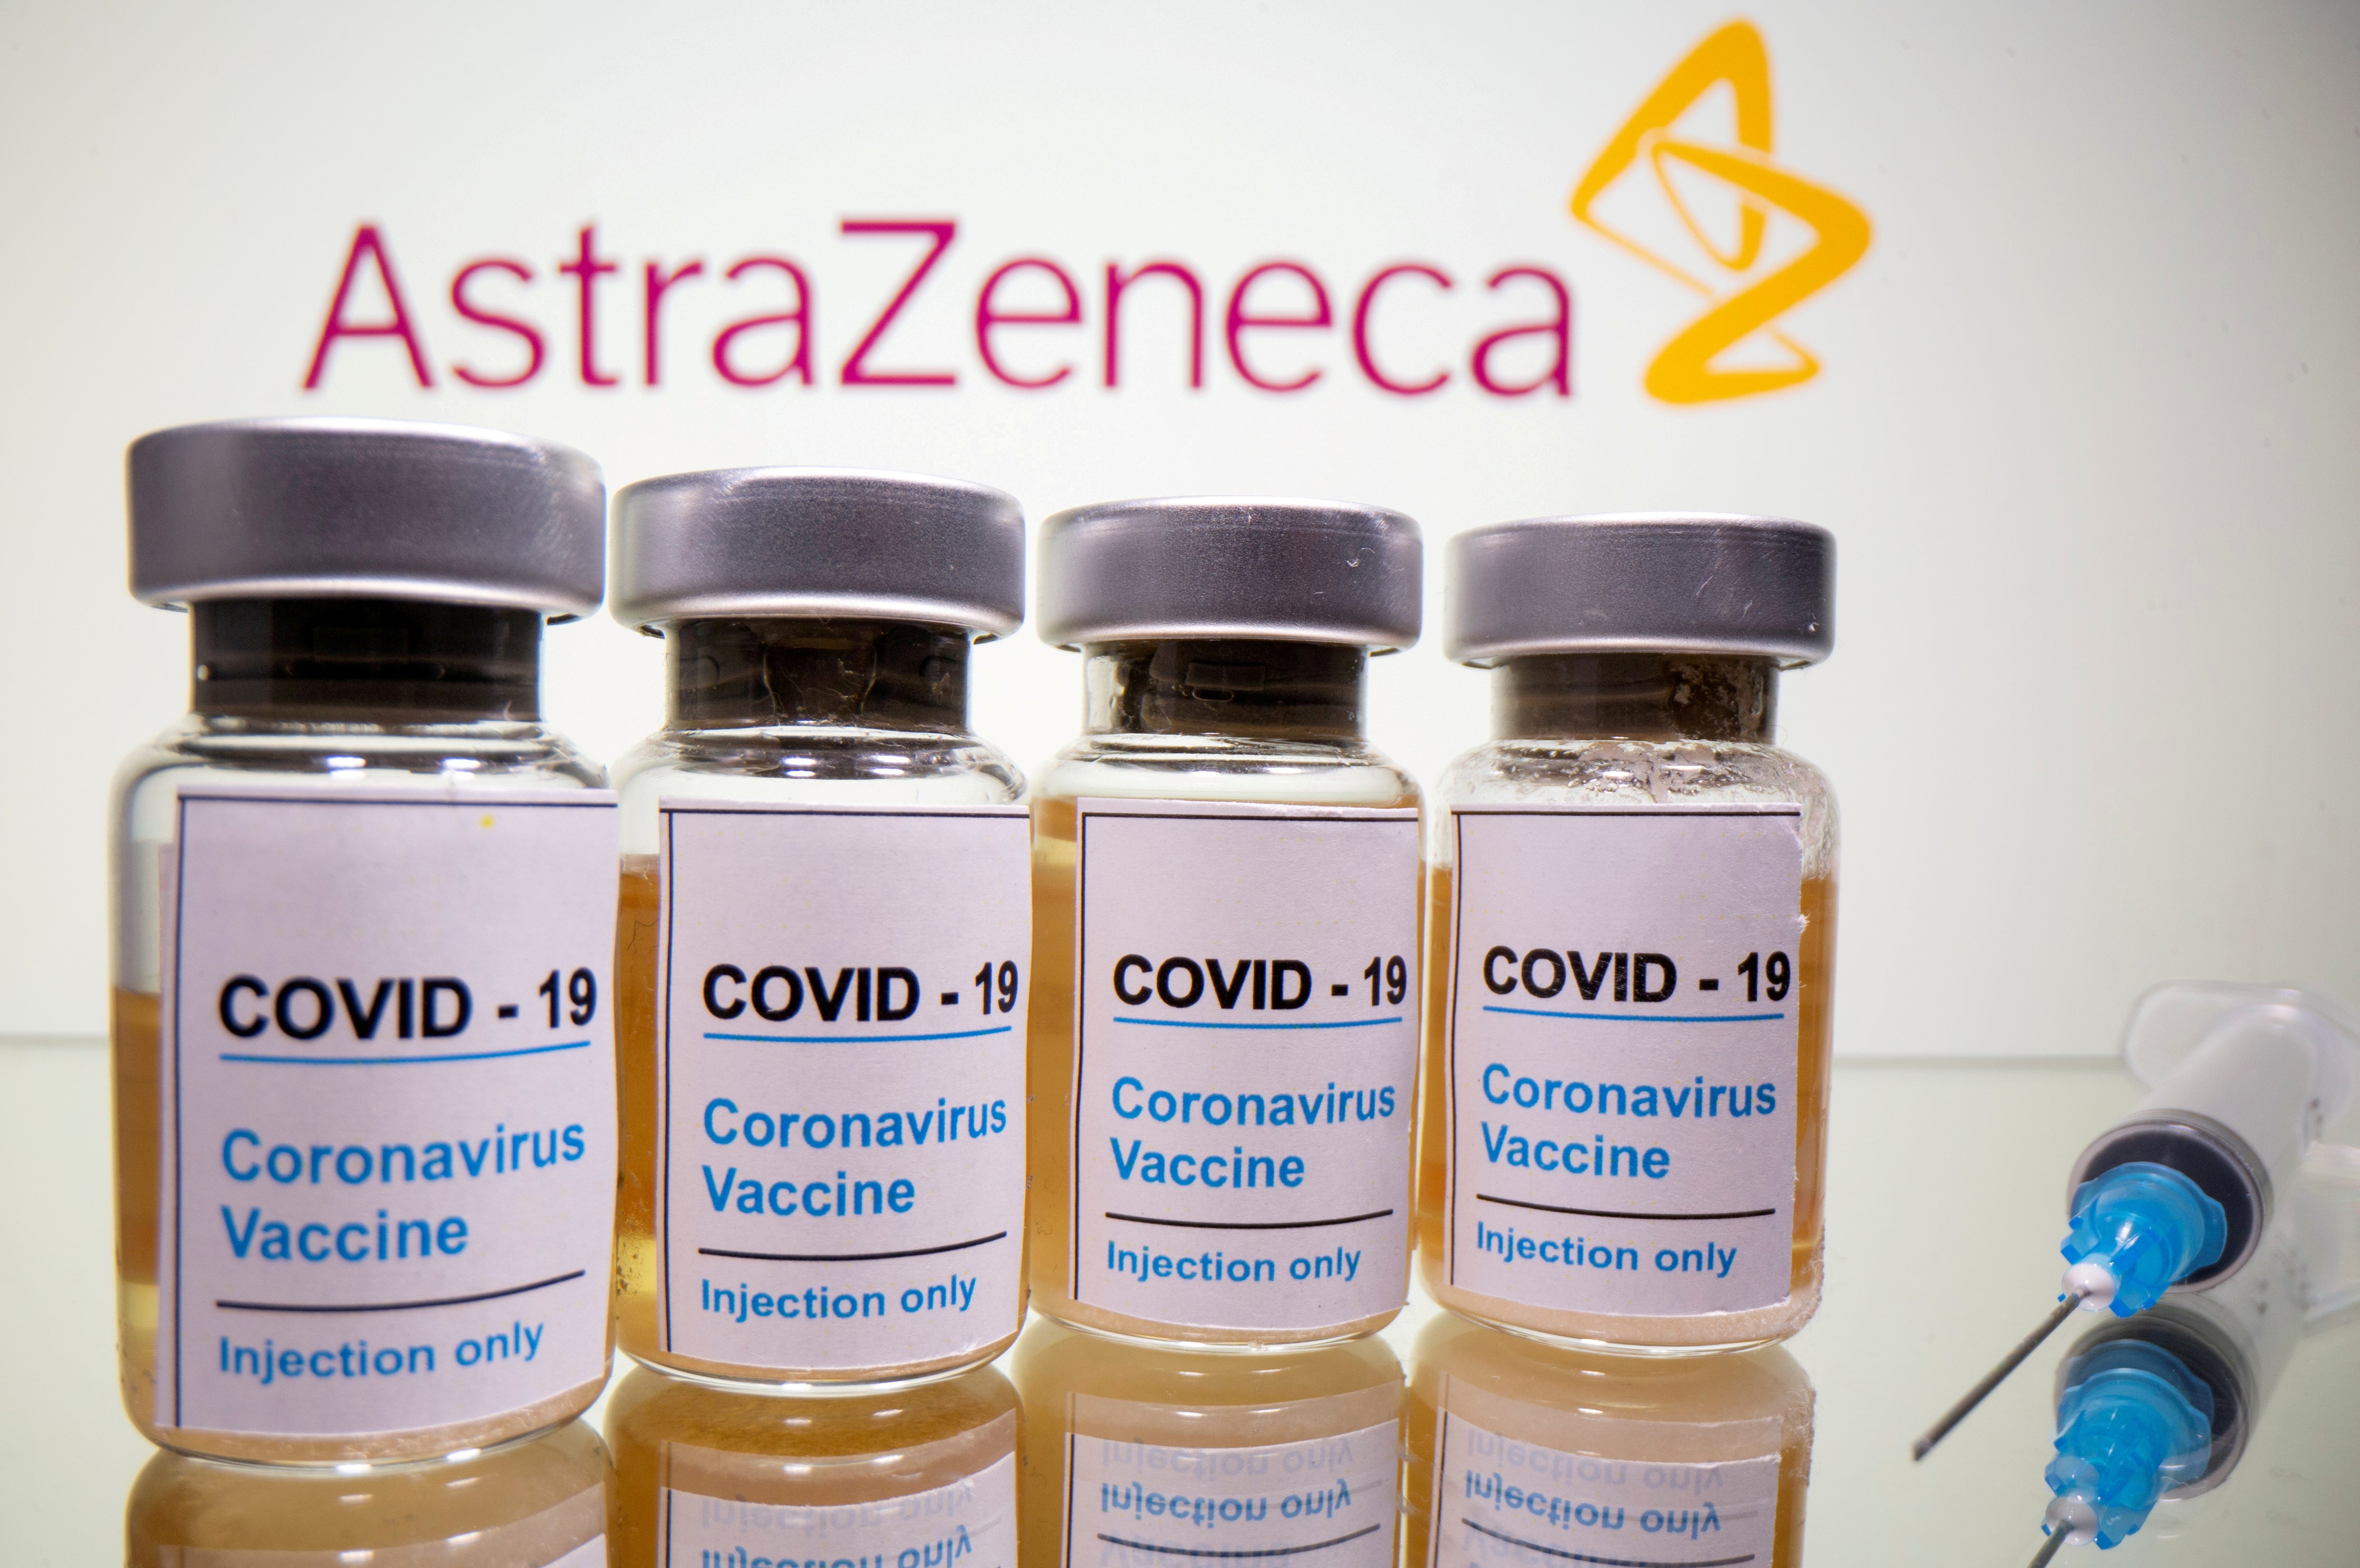 The holy grail? AstraZeneca’s Covid-19 vaccine